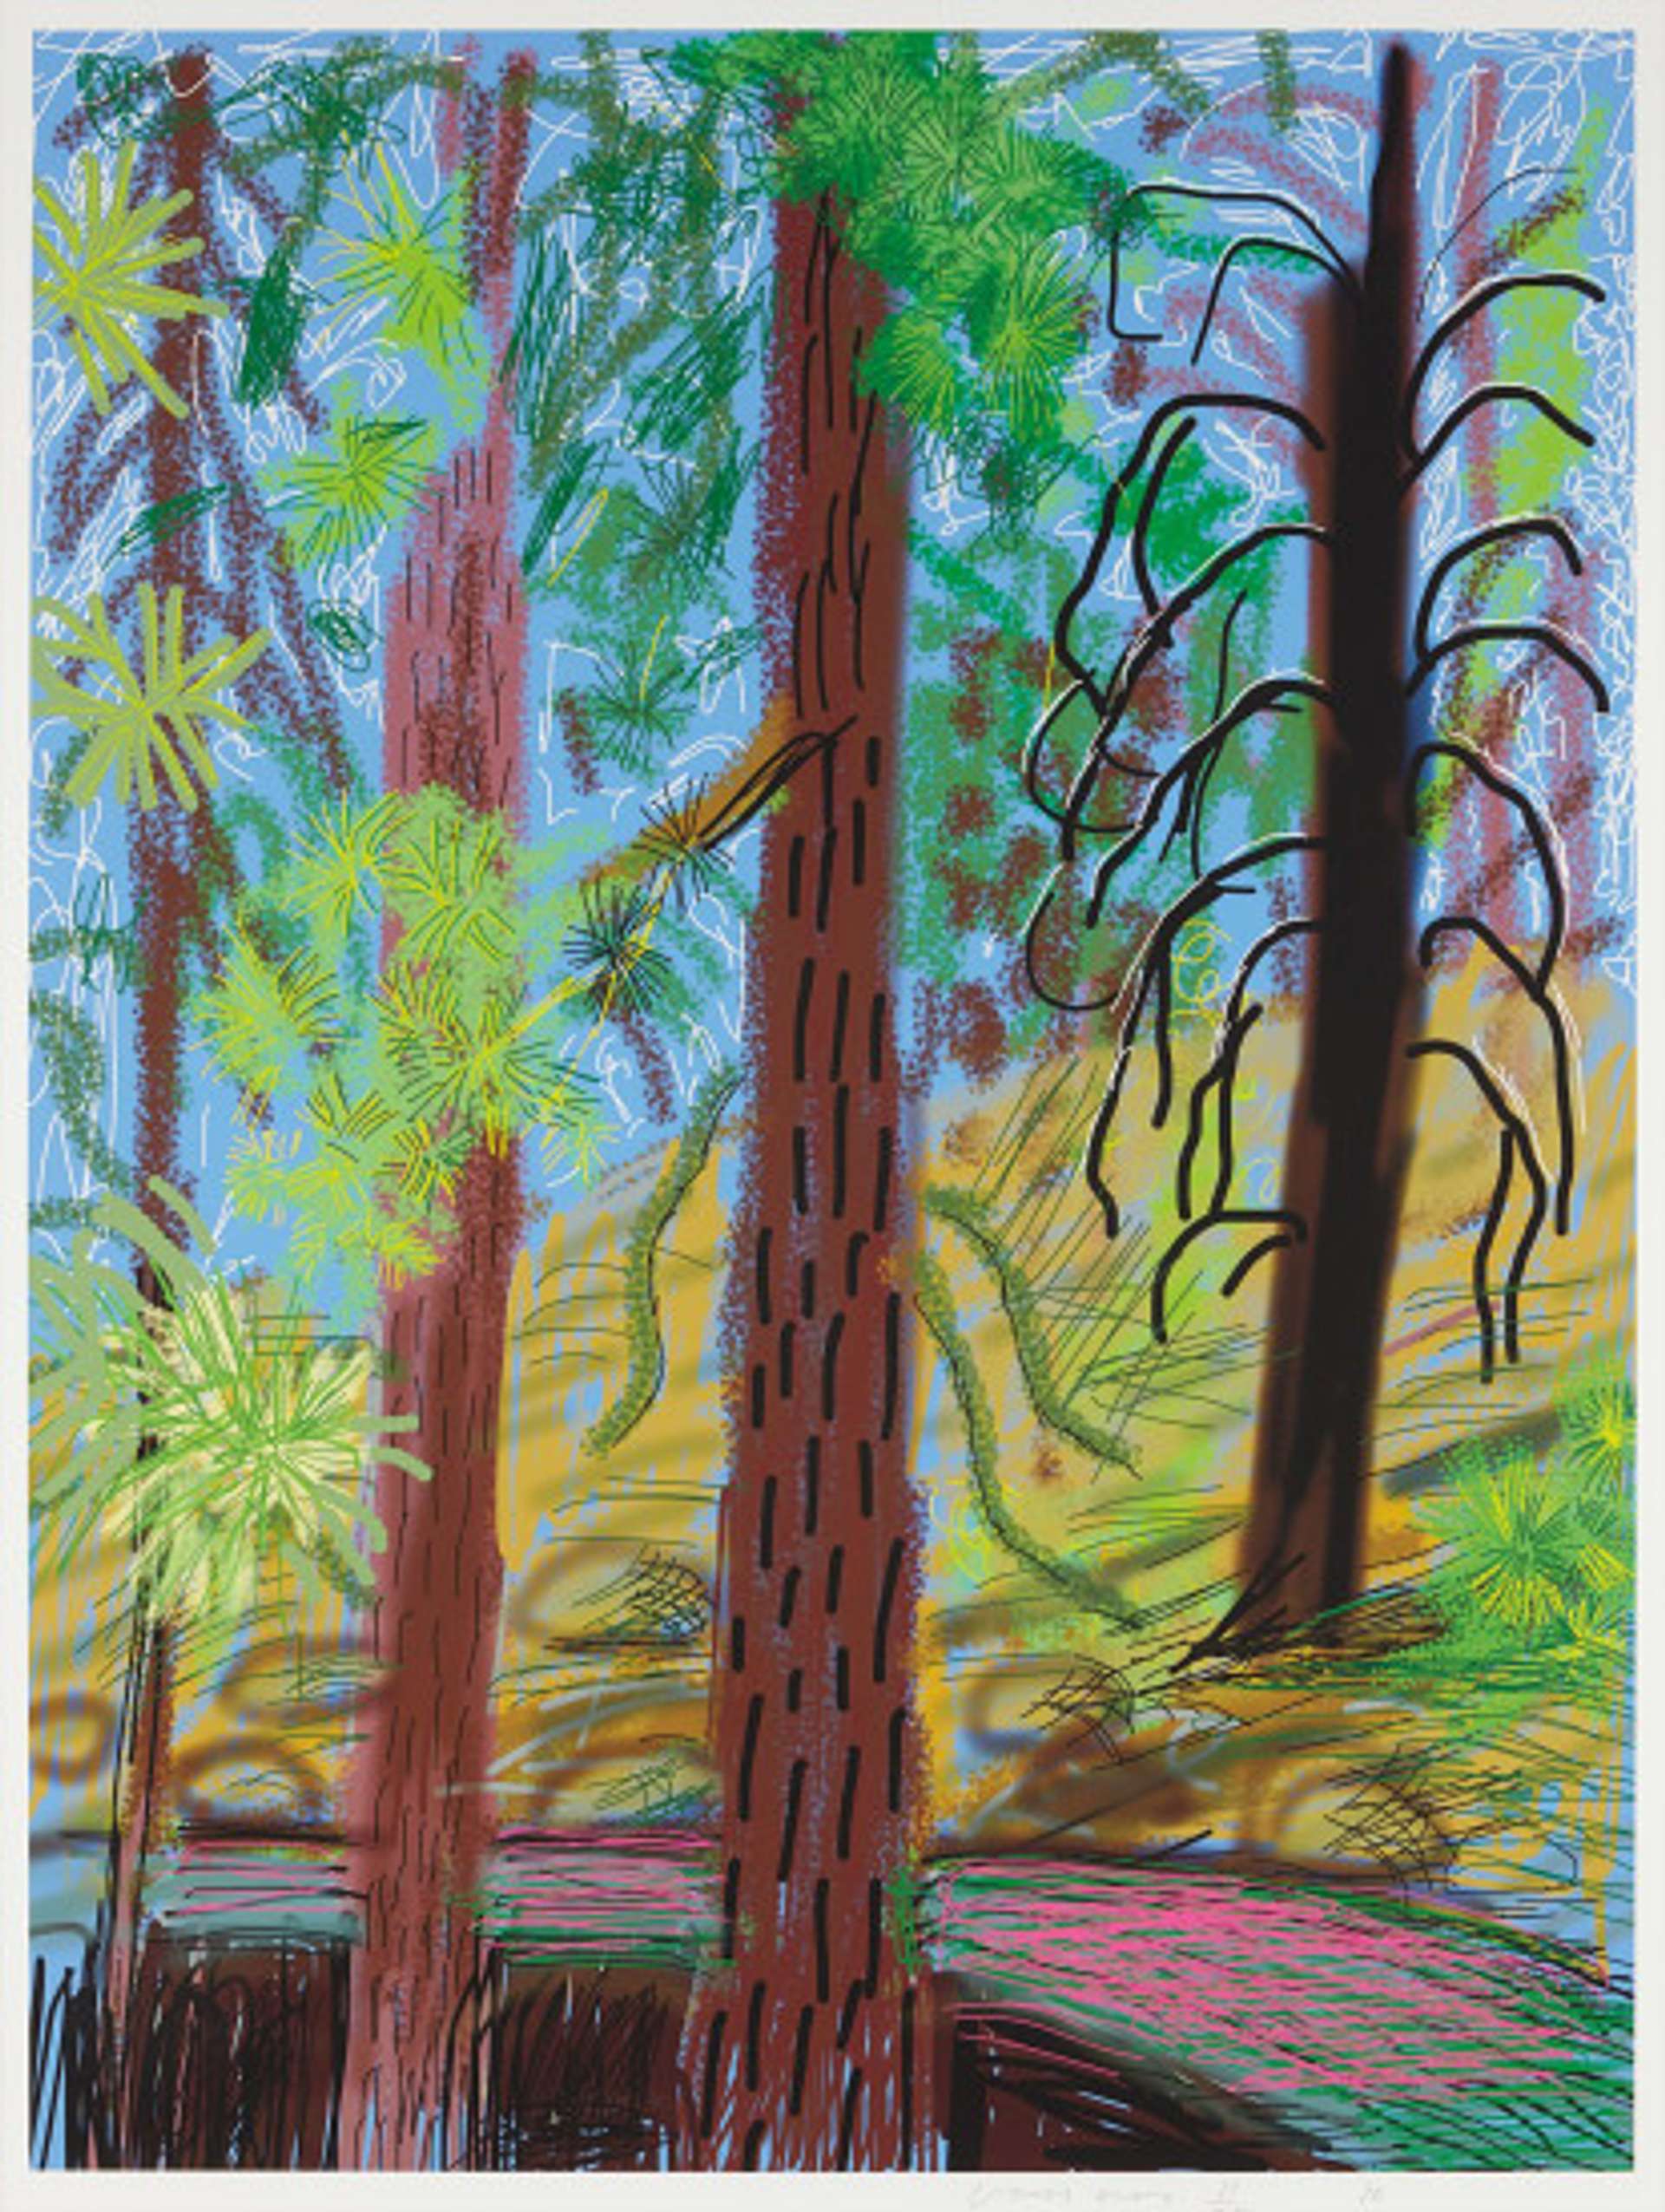 The Yosemite Suite 6 - Signed Print by David Hockney 2010 - MyArtBroker